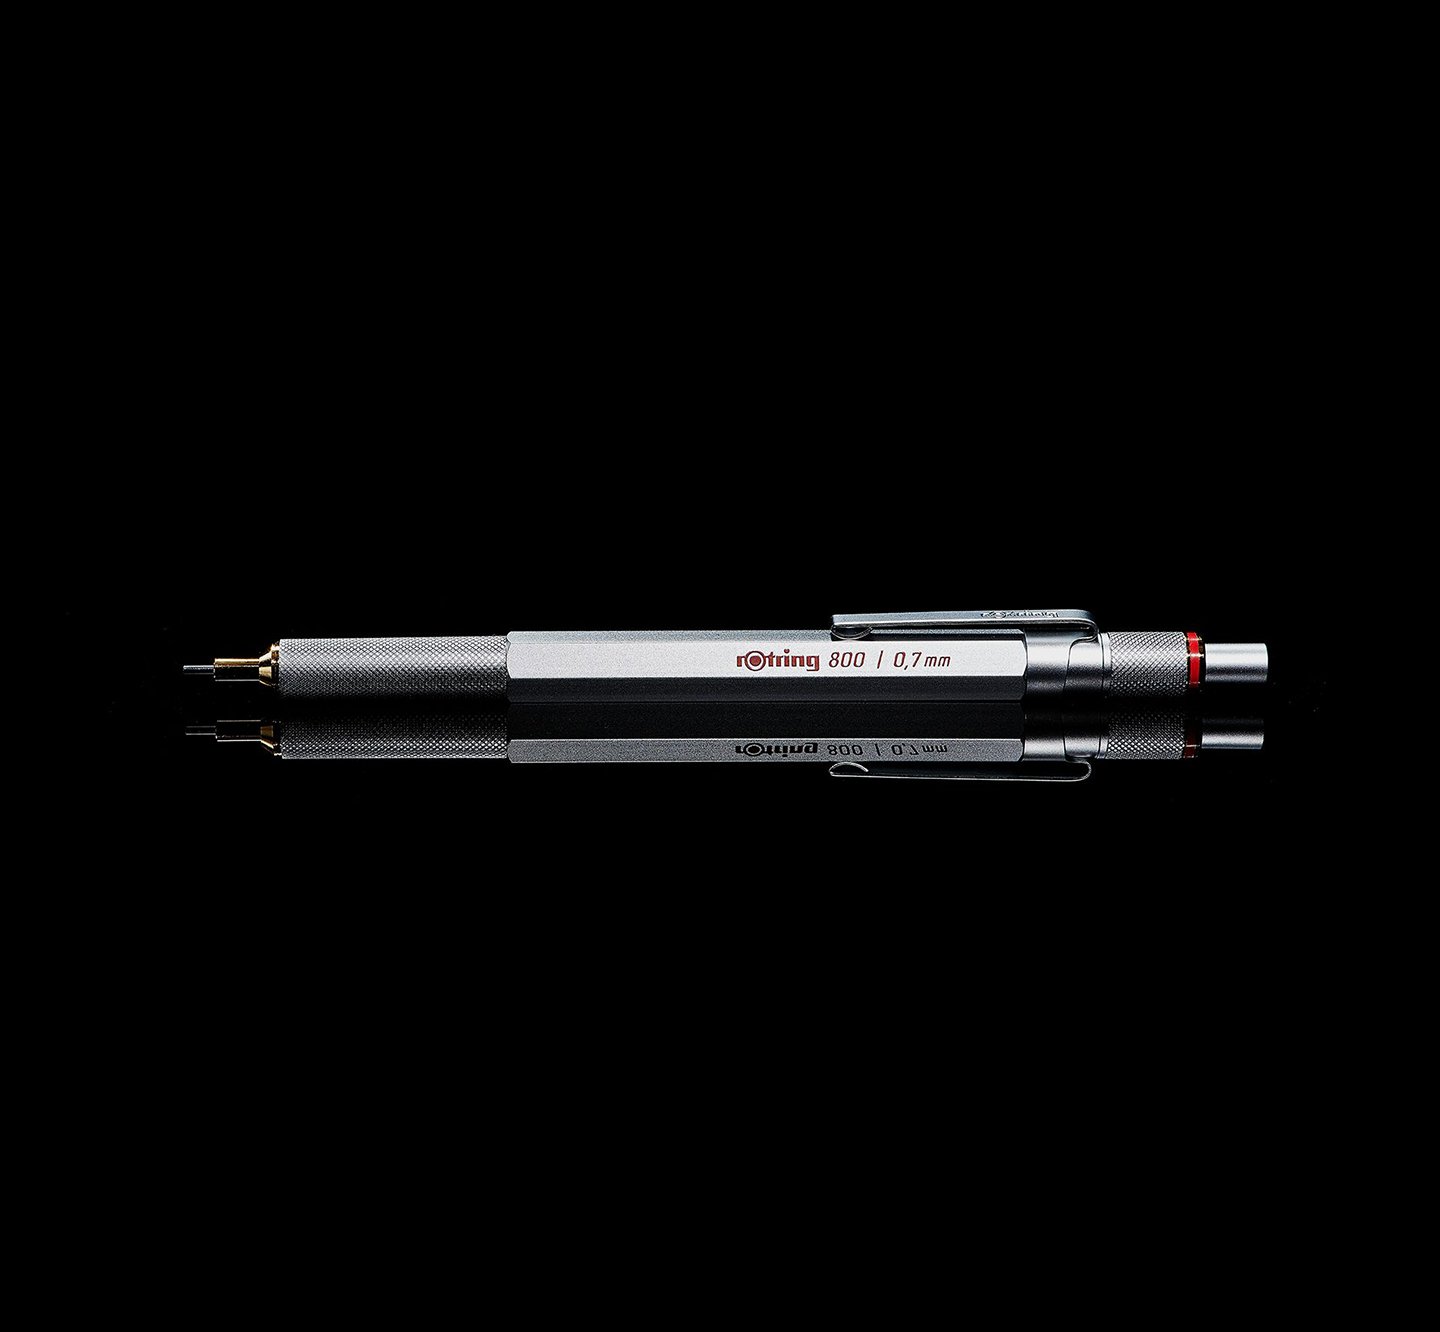 rOtring 600 3in1 multifunction pen